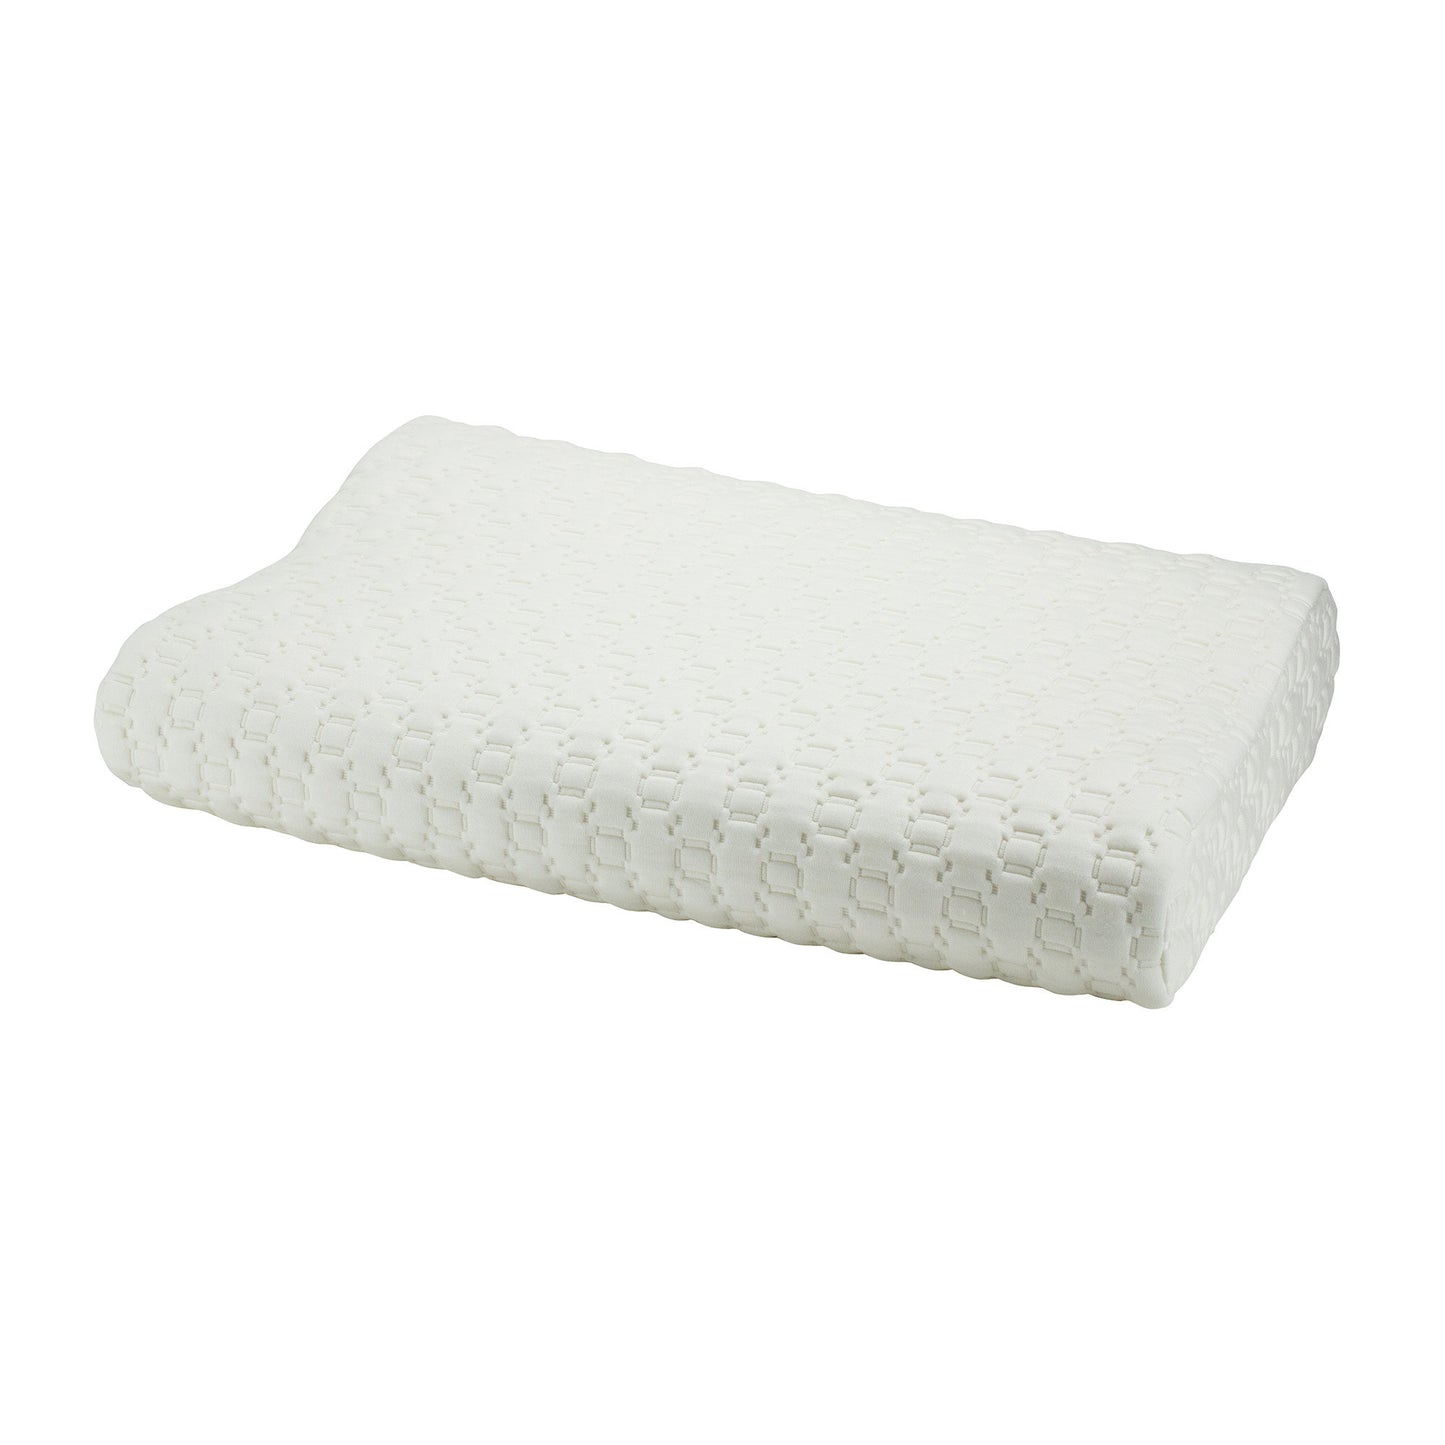 ObusForme Comfort Sleep Contoured Pillow - 15-07347